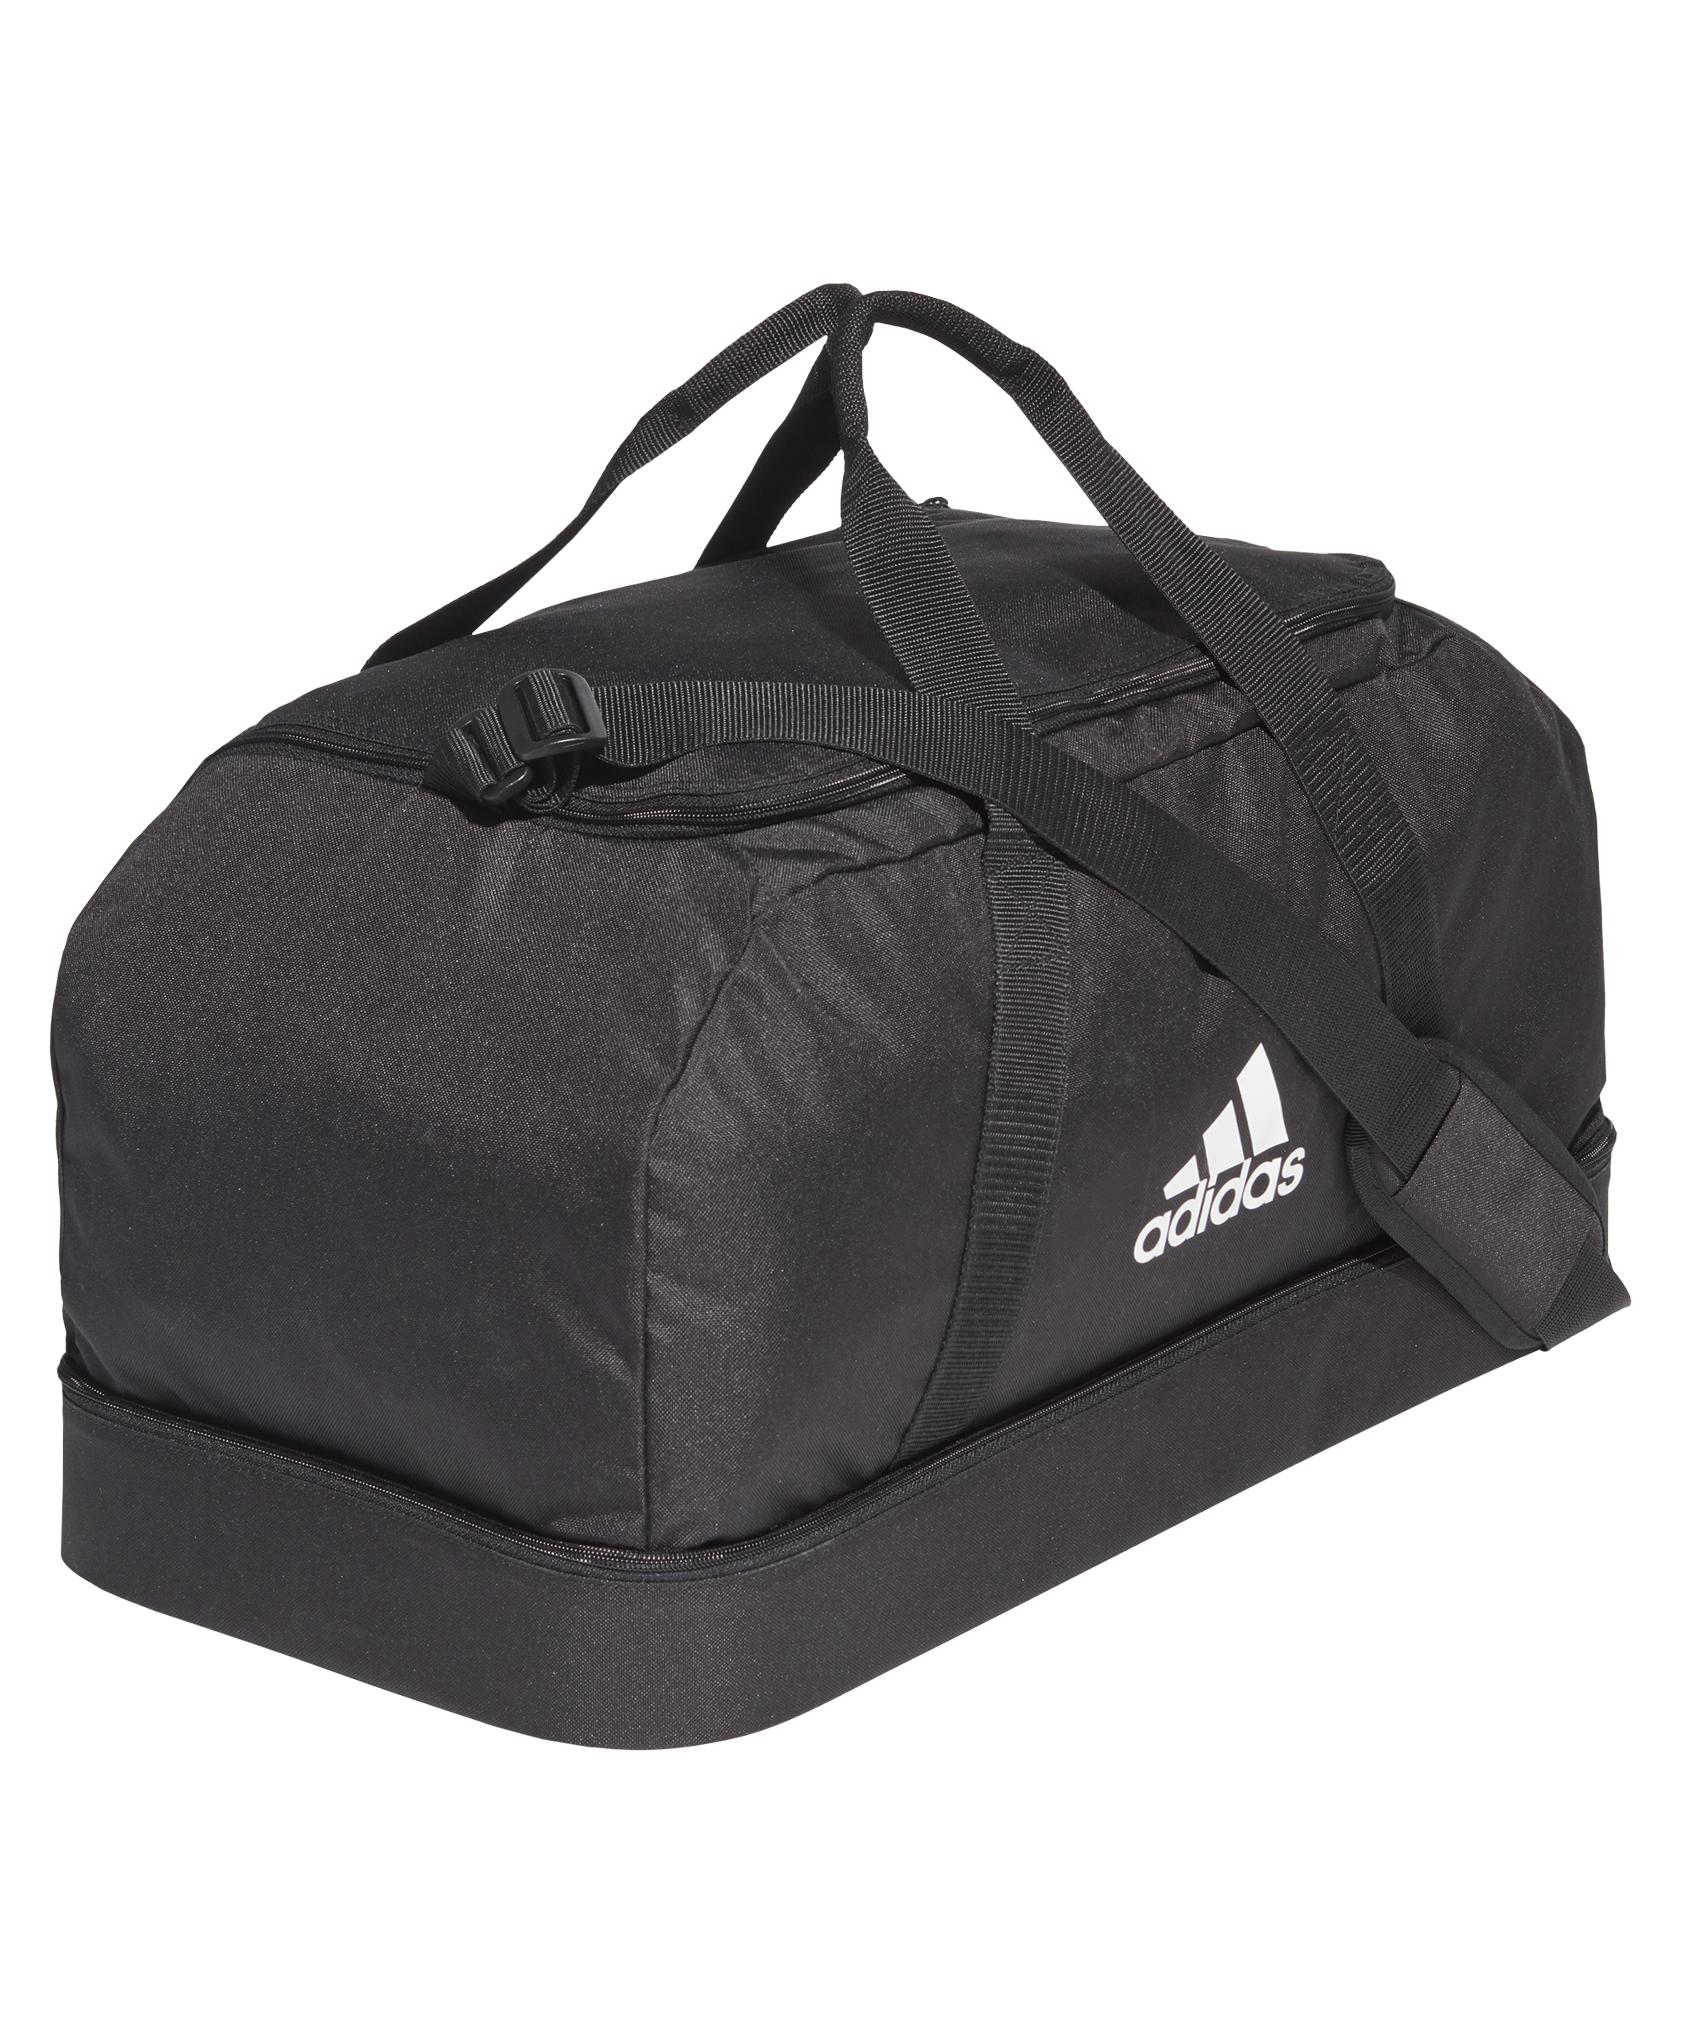 Adidas Tiro Bag